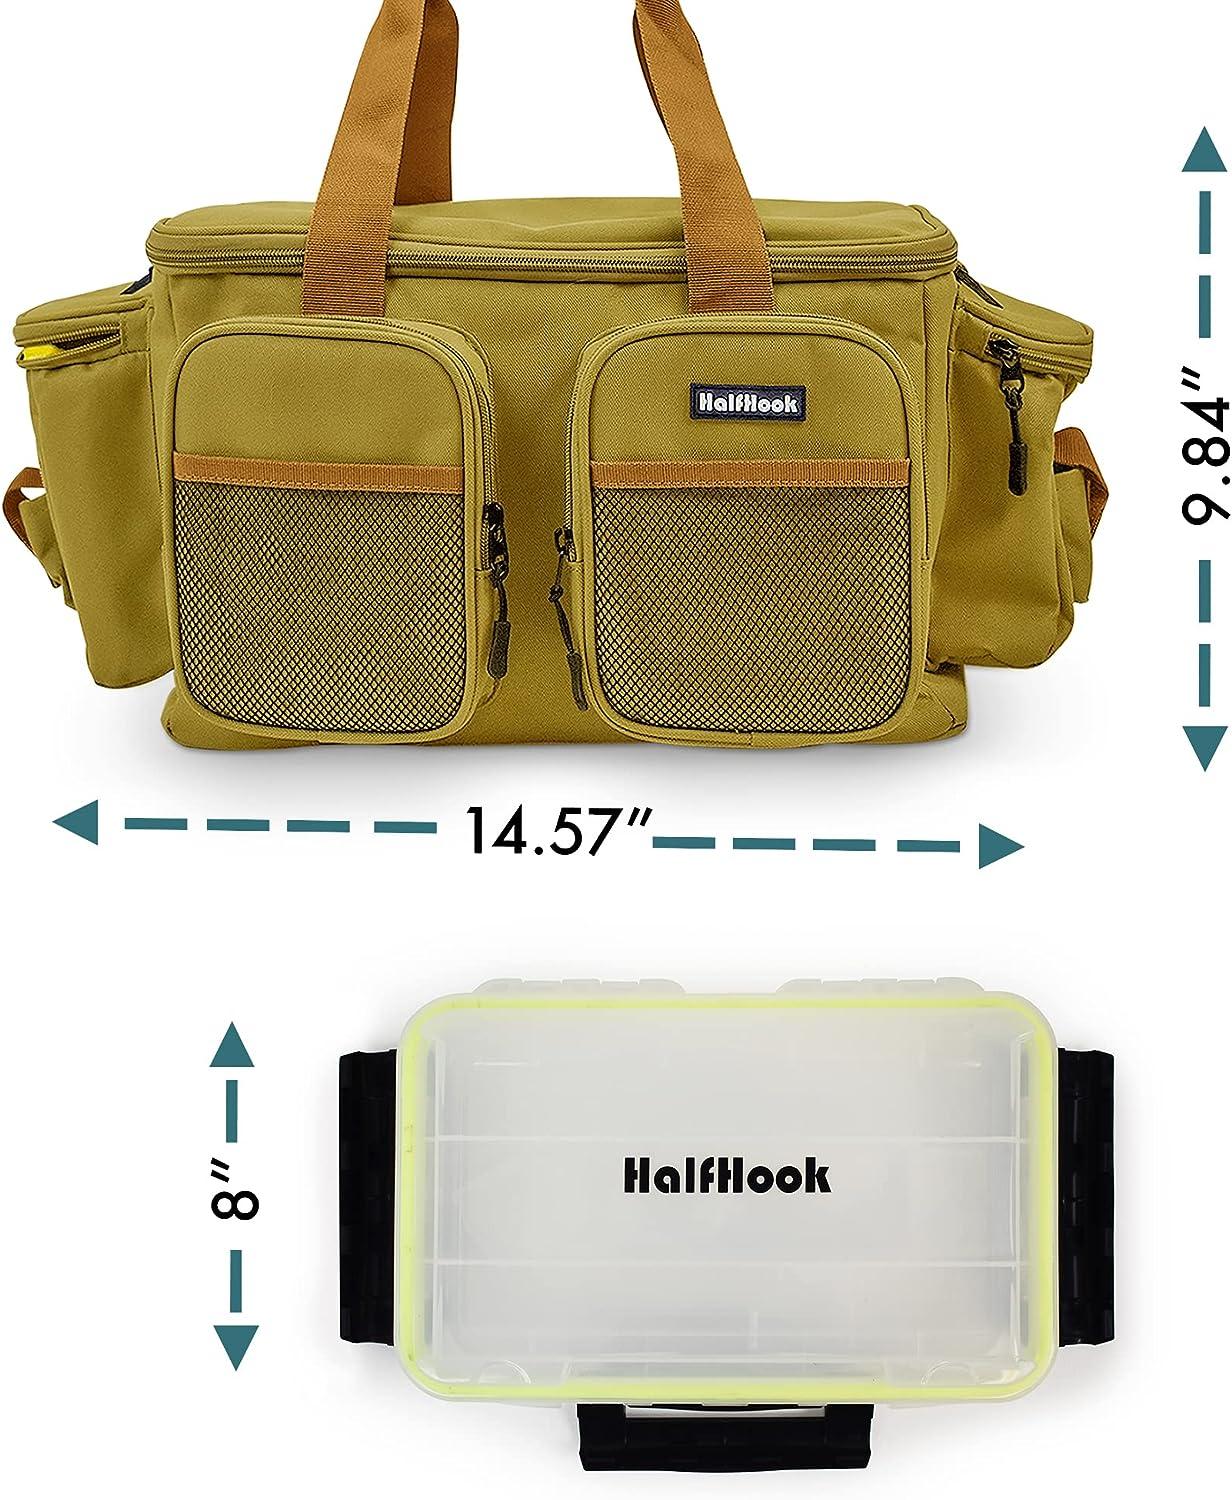 Halfhook Nylon Fishing Tackle Bag Waterproof Fishing Tackle Bag with 6  External & 1 Main Compartment Heavy Duty Hardware Fishing Gear Bag Capacity  to Hold 4 Tackle Boxes - 14.57*9.06*9.84 Khaki